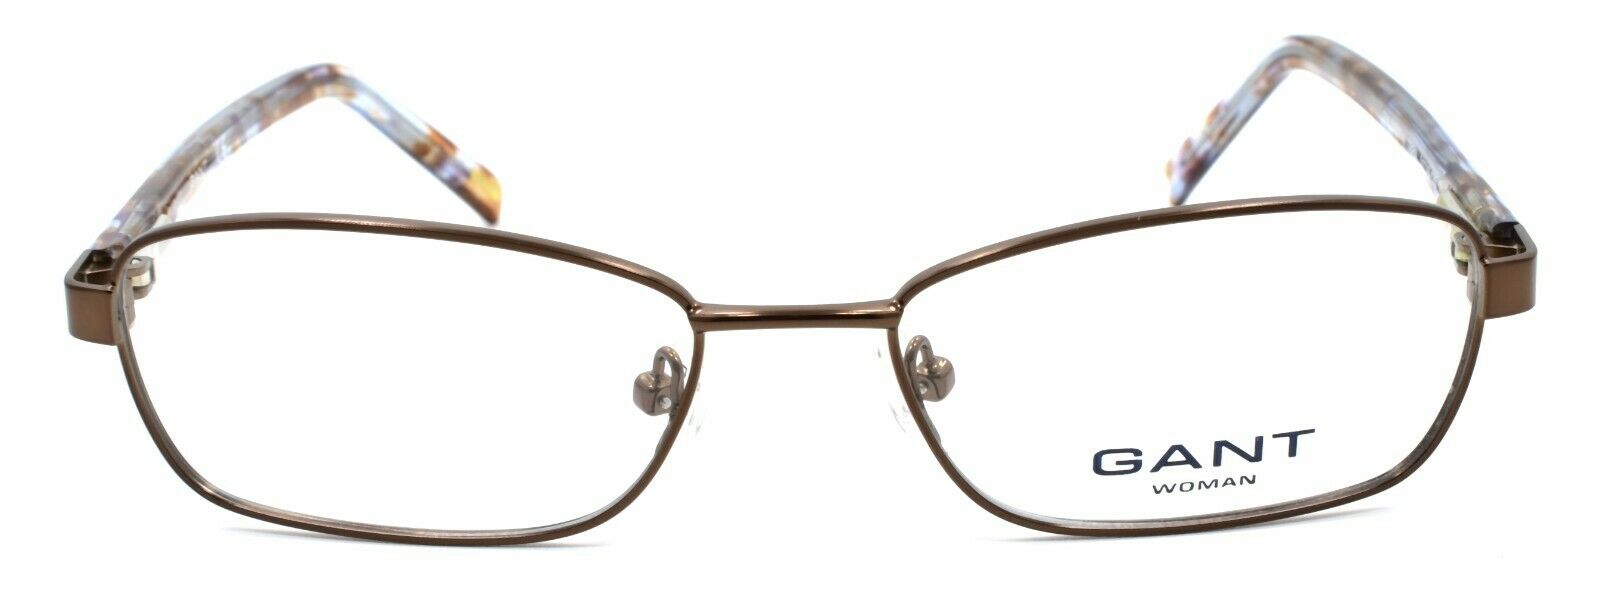 2-GANT GW Sierra SBRN Women's Eyeglasses Frames 51-16-135 Satin Brown-715583395329-IKSpecs